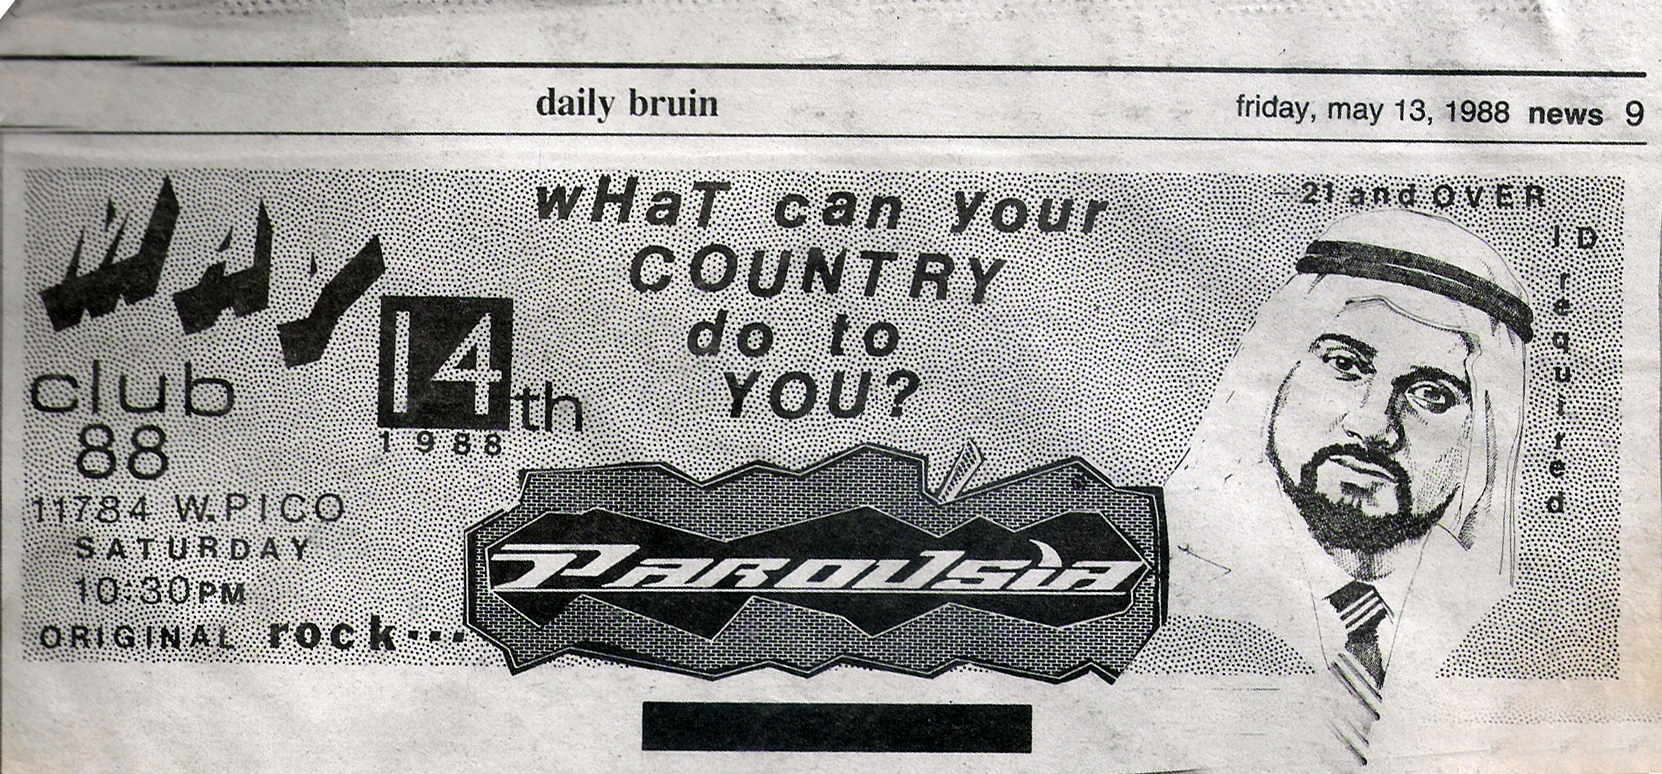 UCLA Daily Bruin - PAROUSIA debut at CLUB 88, Los Angeles, CA. May 14, 1988